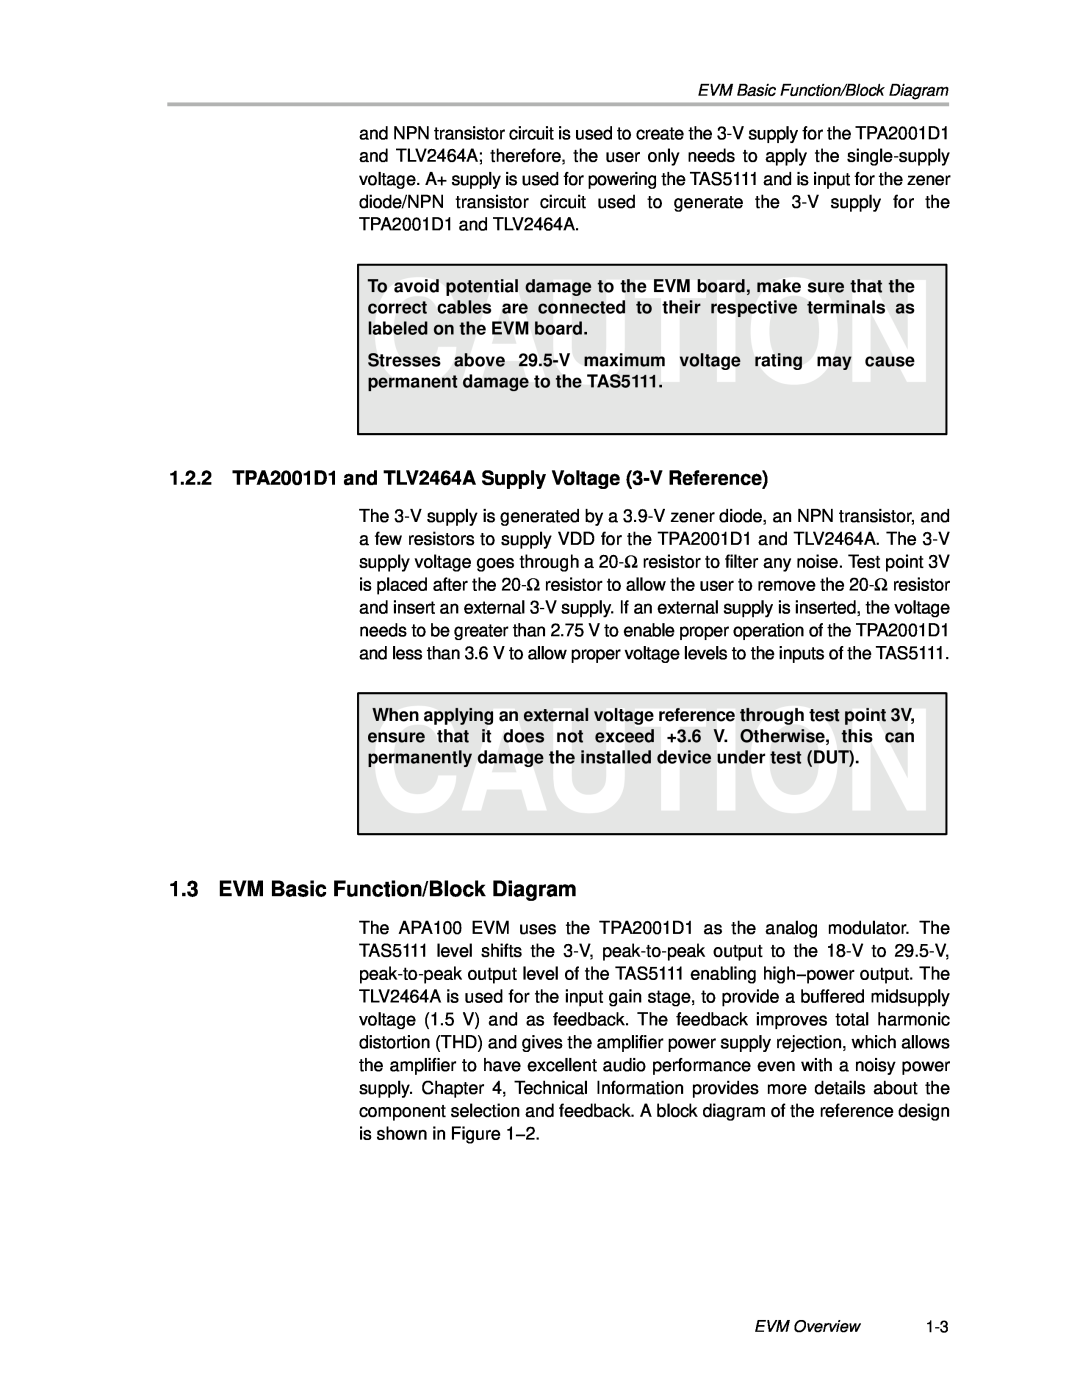 Texas Instruments APA100 manual EVM Basic Function/Block Diagram, EVM Overview 